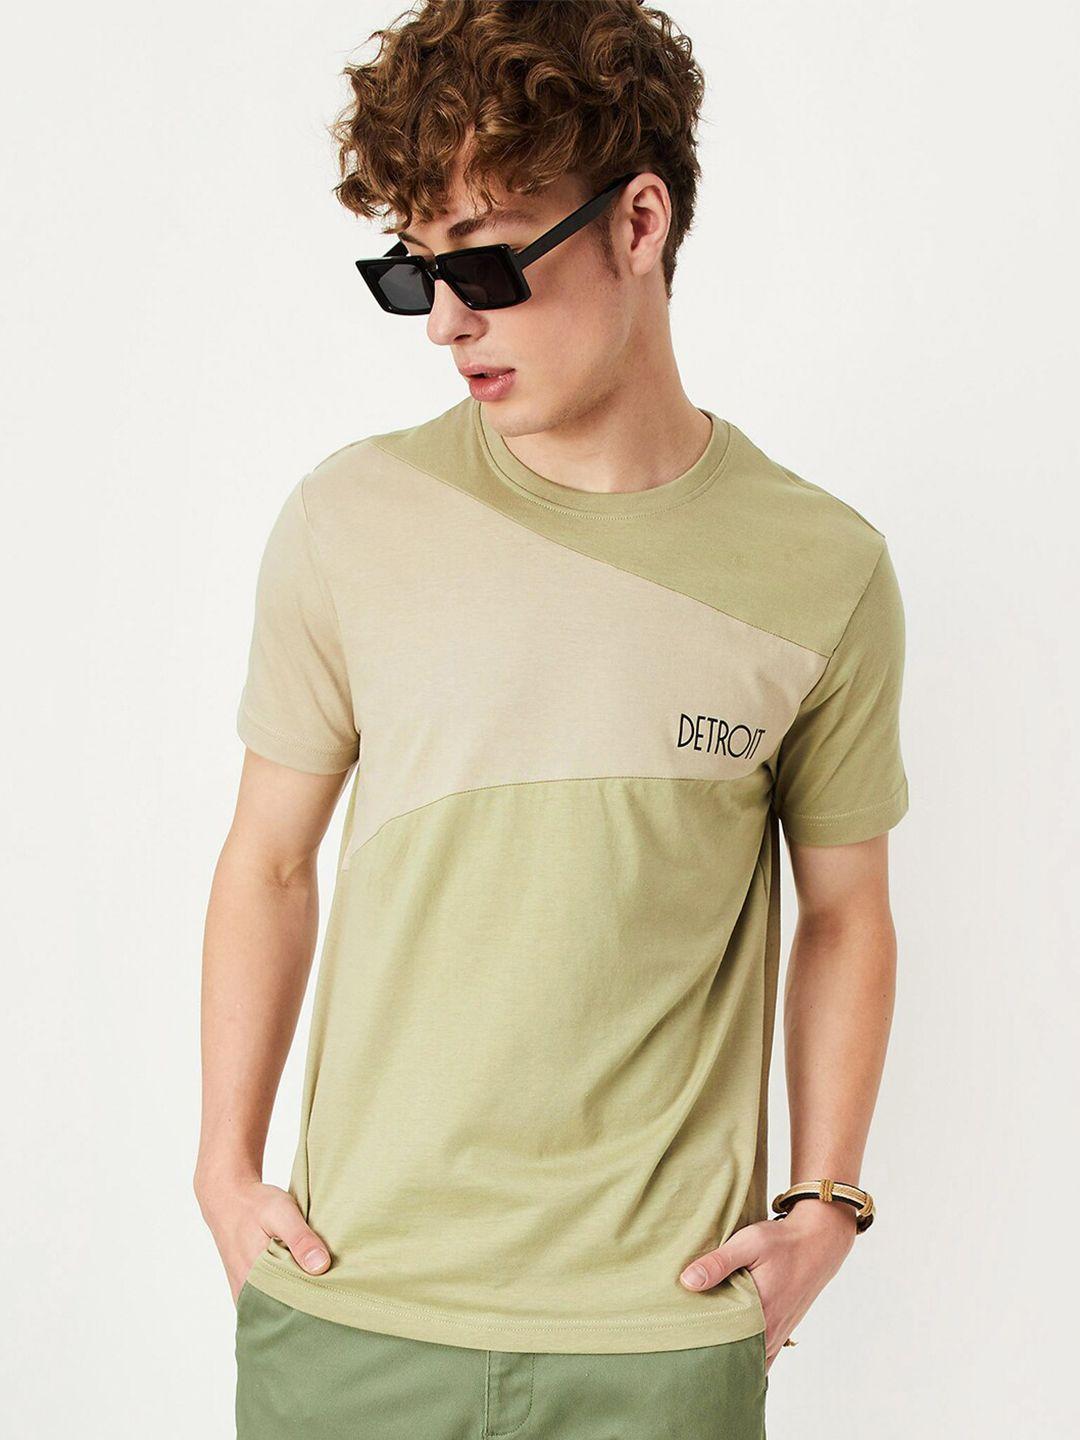 max-colourblocked-short-sleeves-pure-cotton-t-shirt